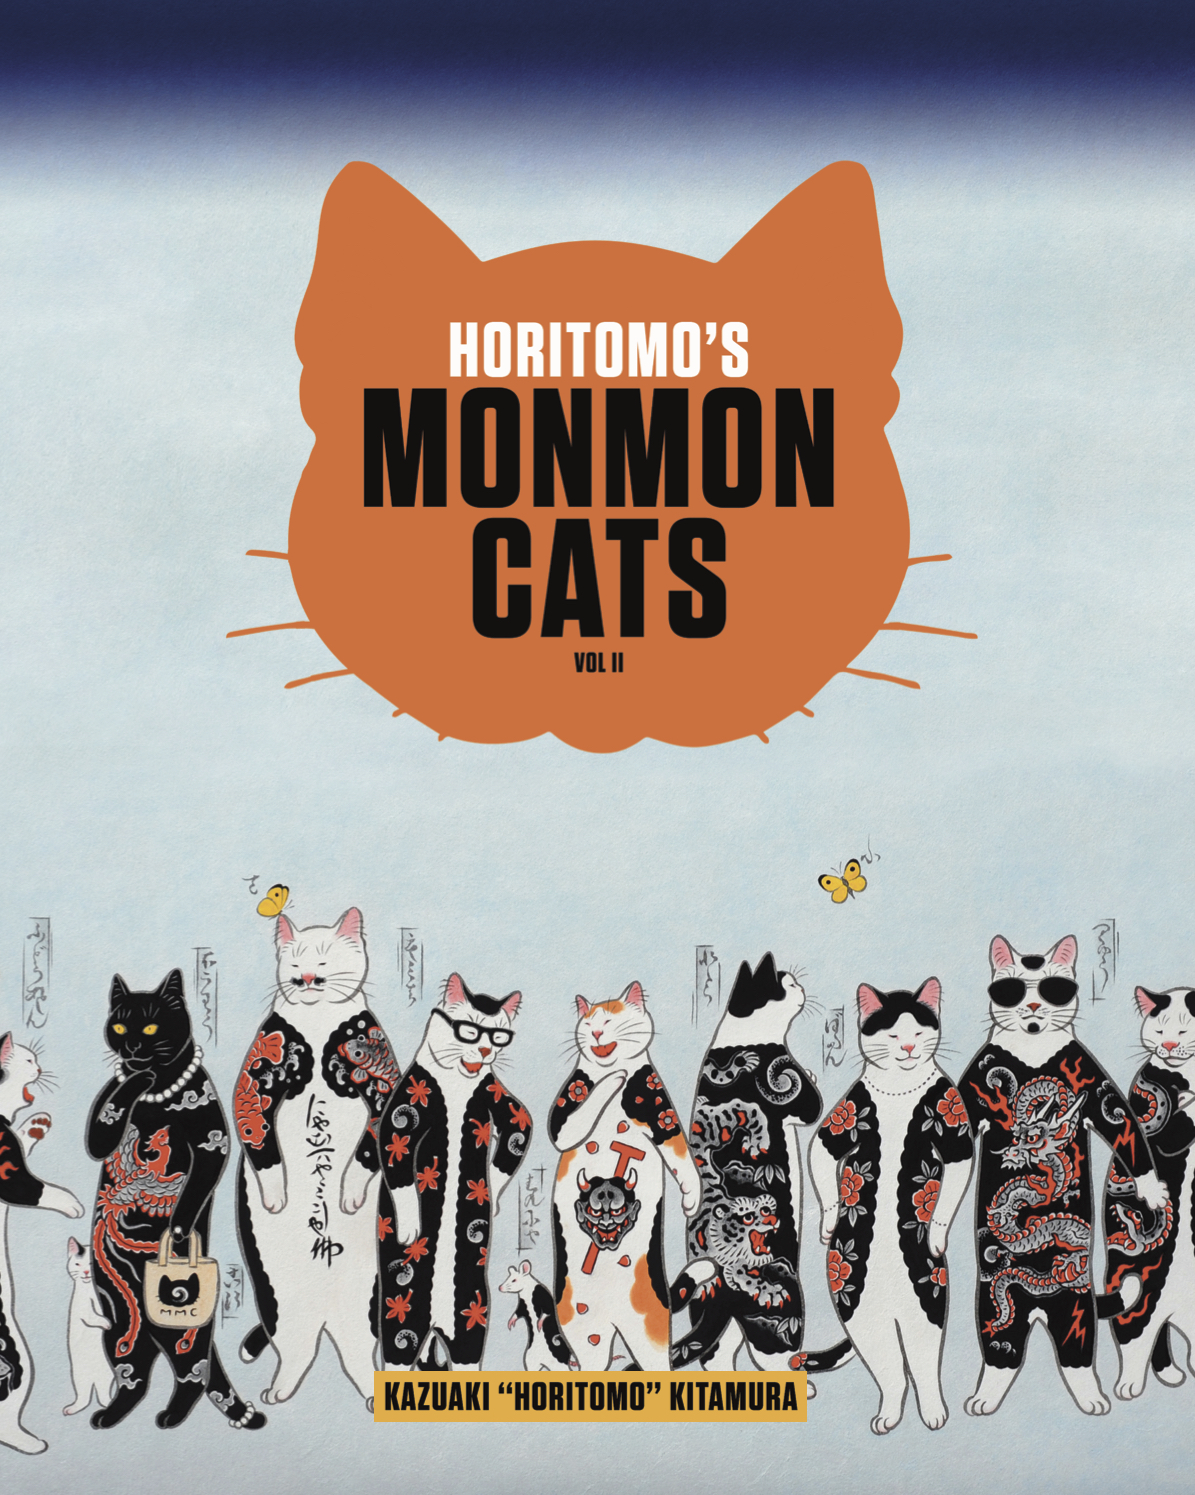 Horitomo S Monmon Cats Vol Ii Nucleus Art Gallery And Store